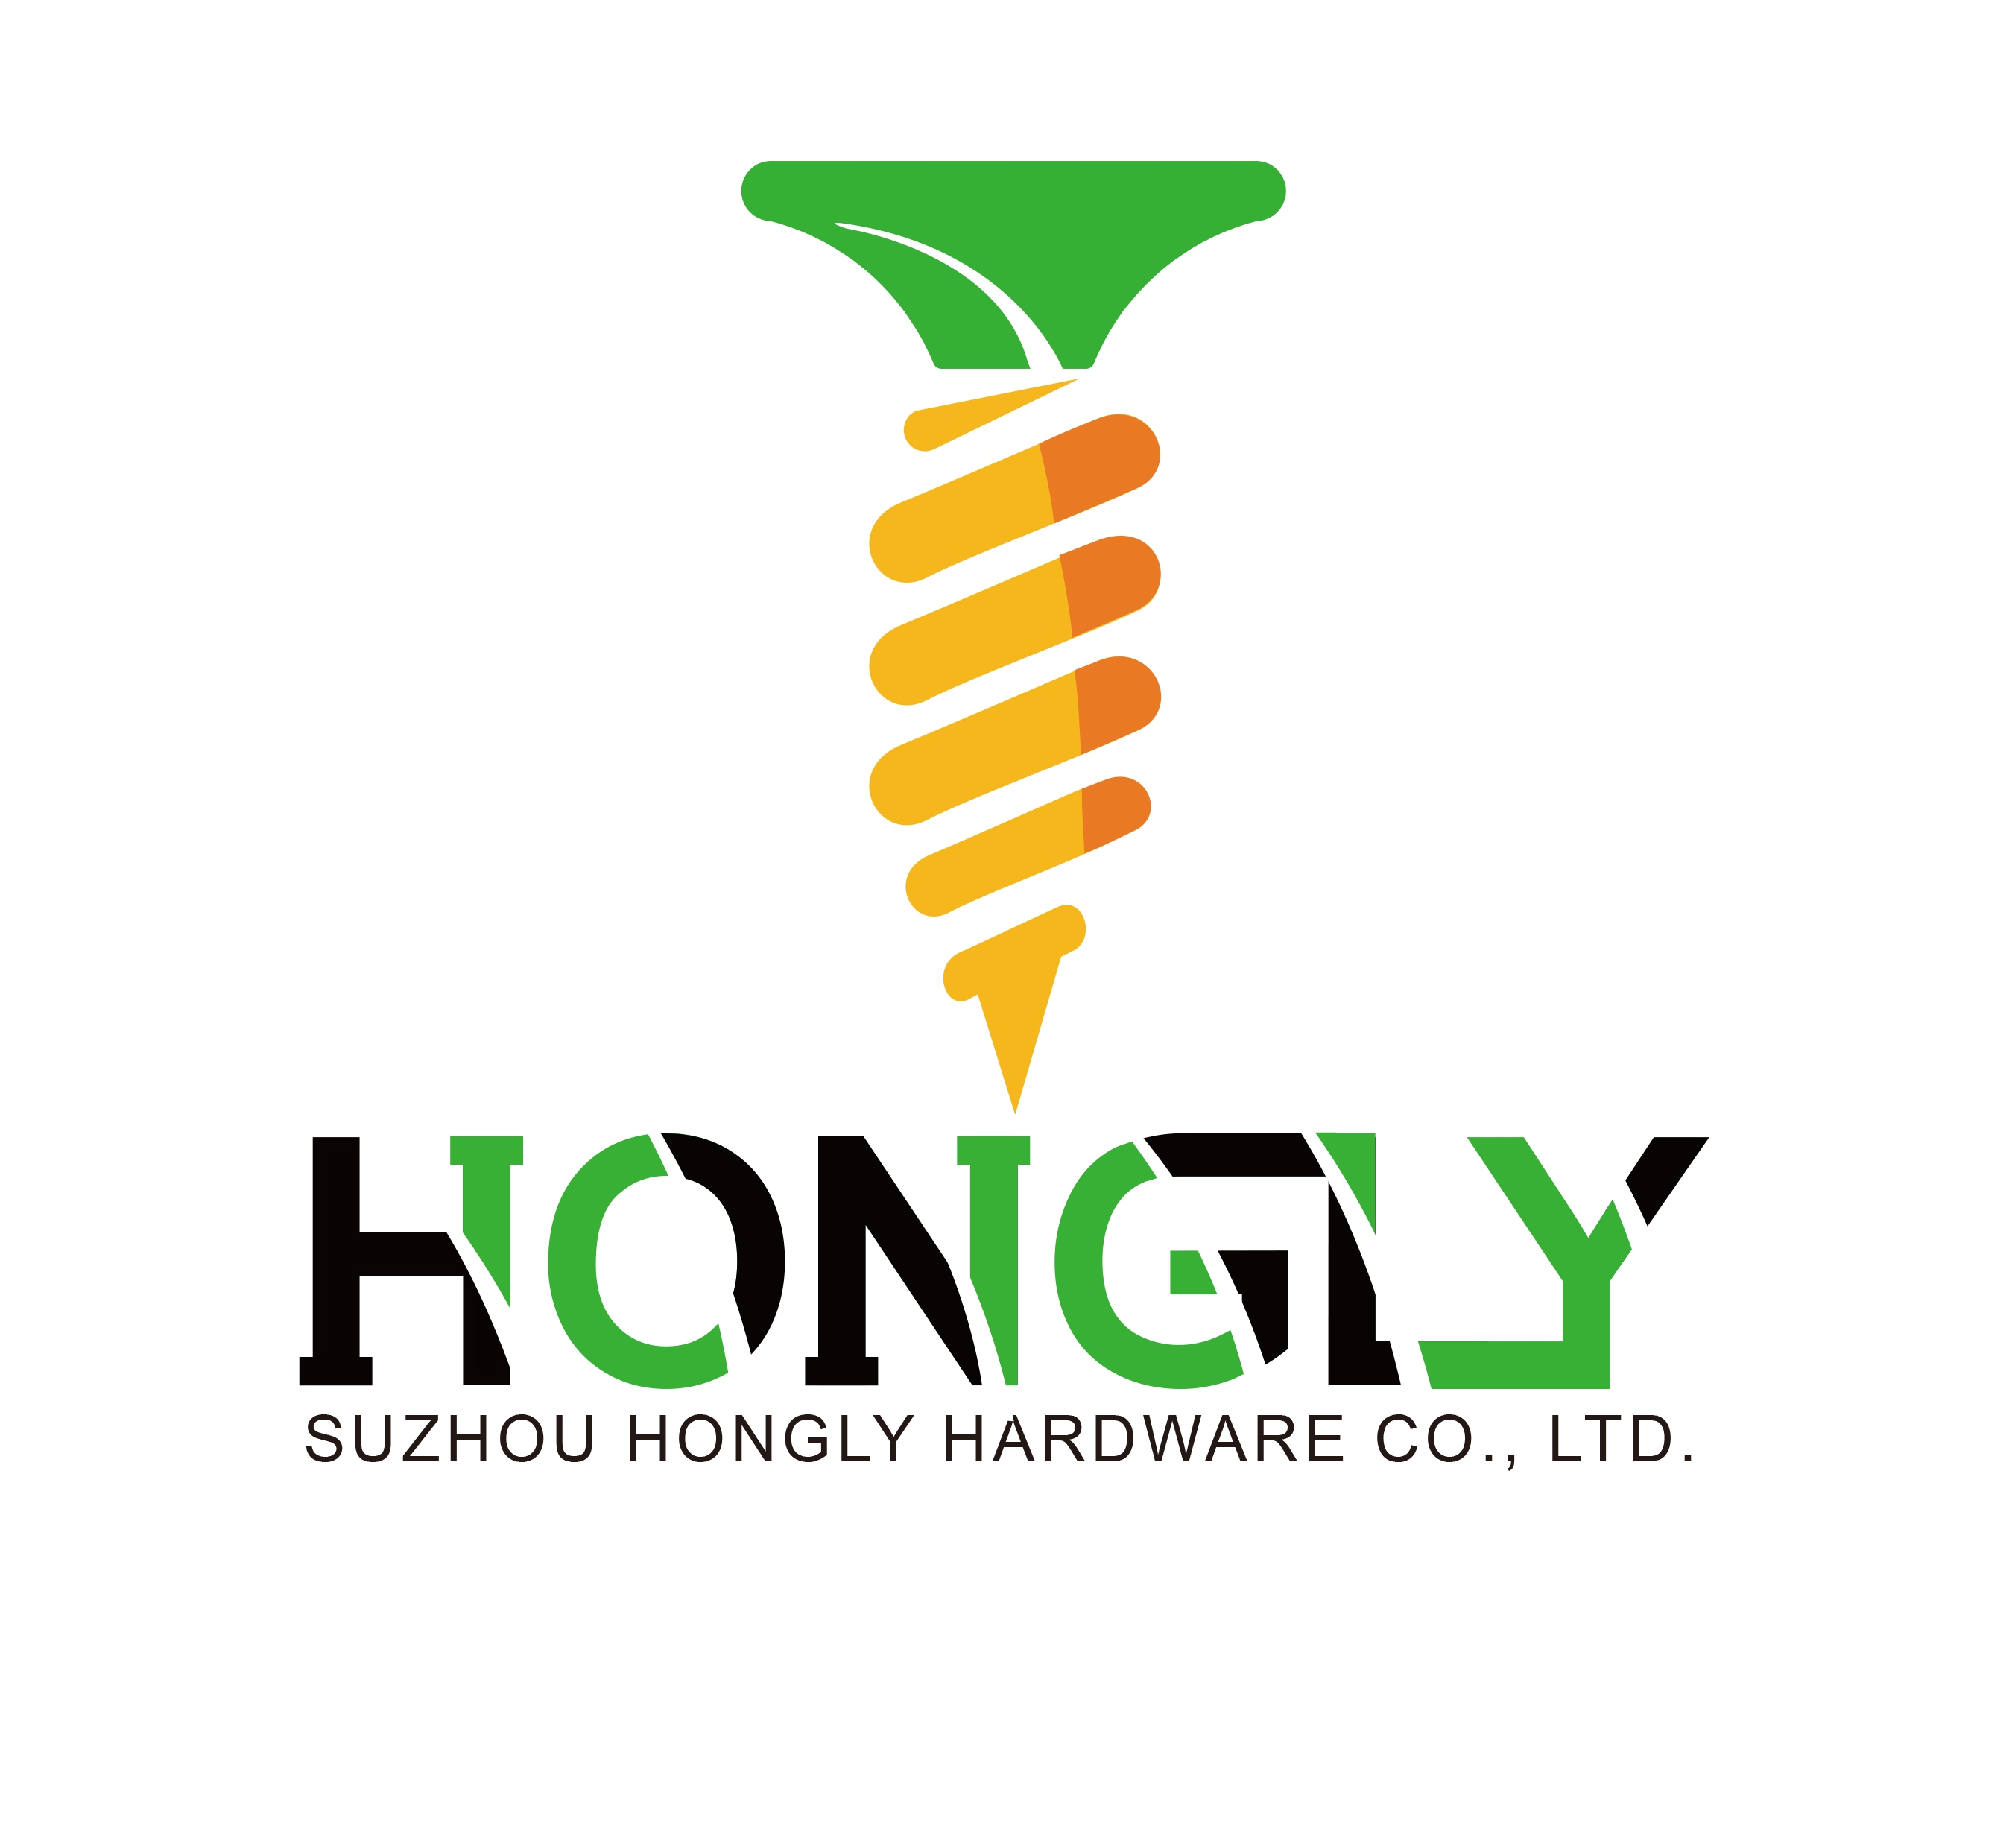 Suzhou Hongly Hardware Co., Ltd